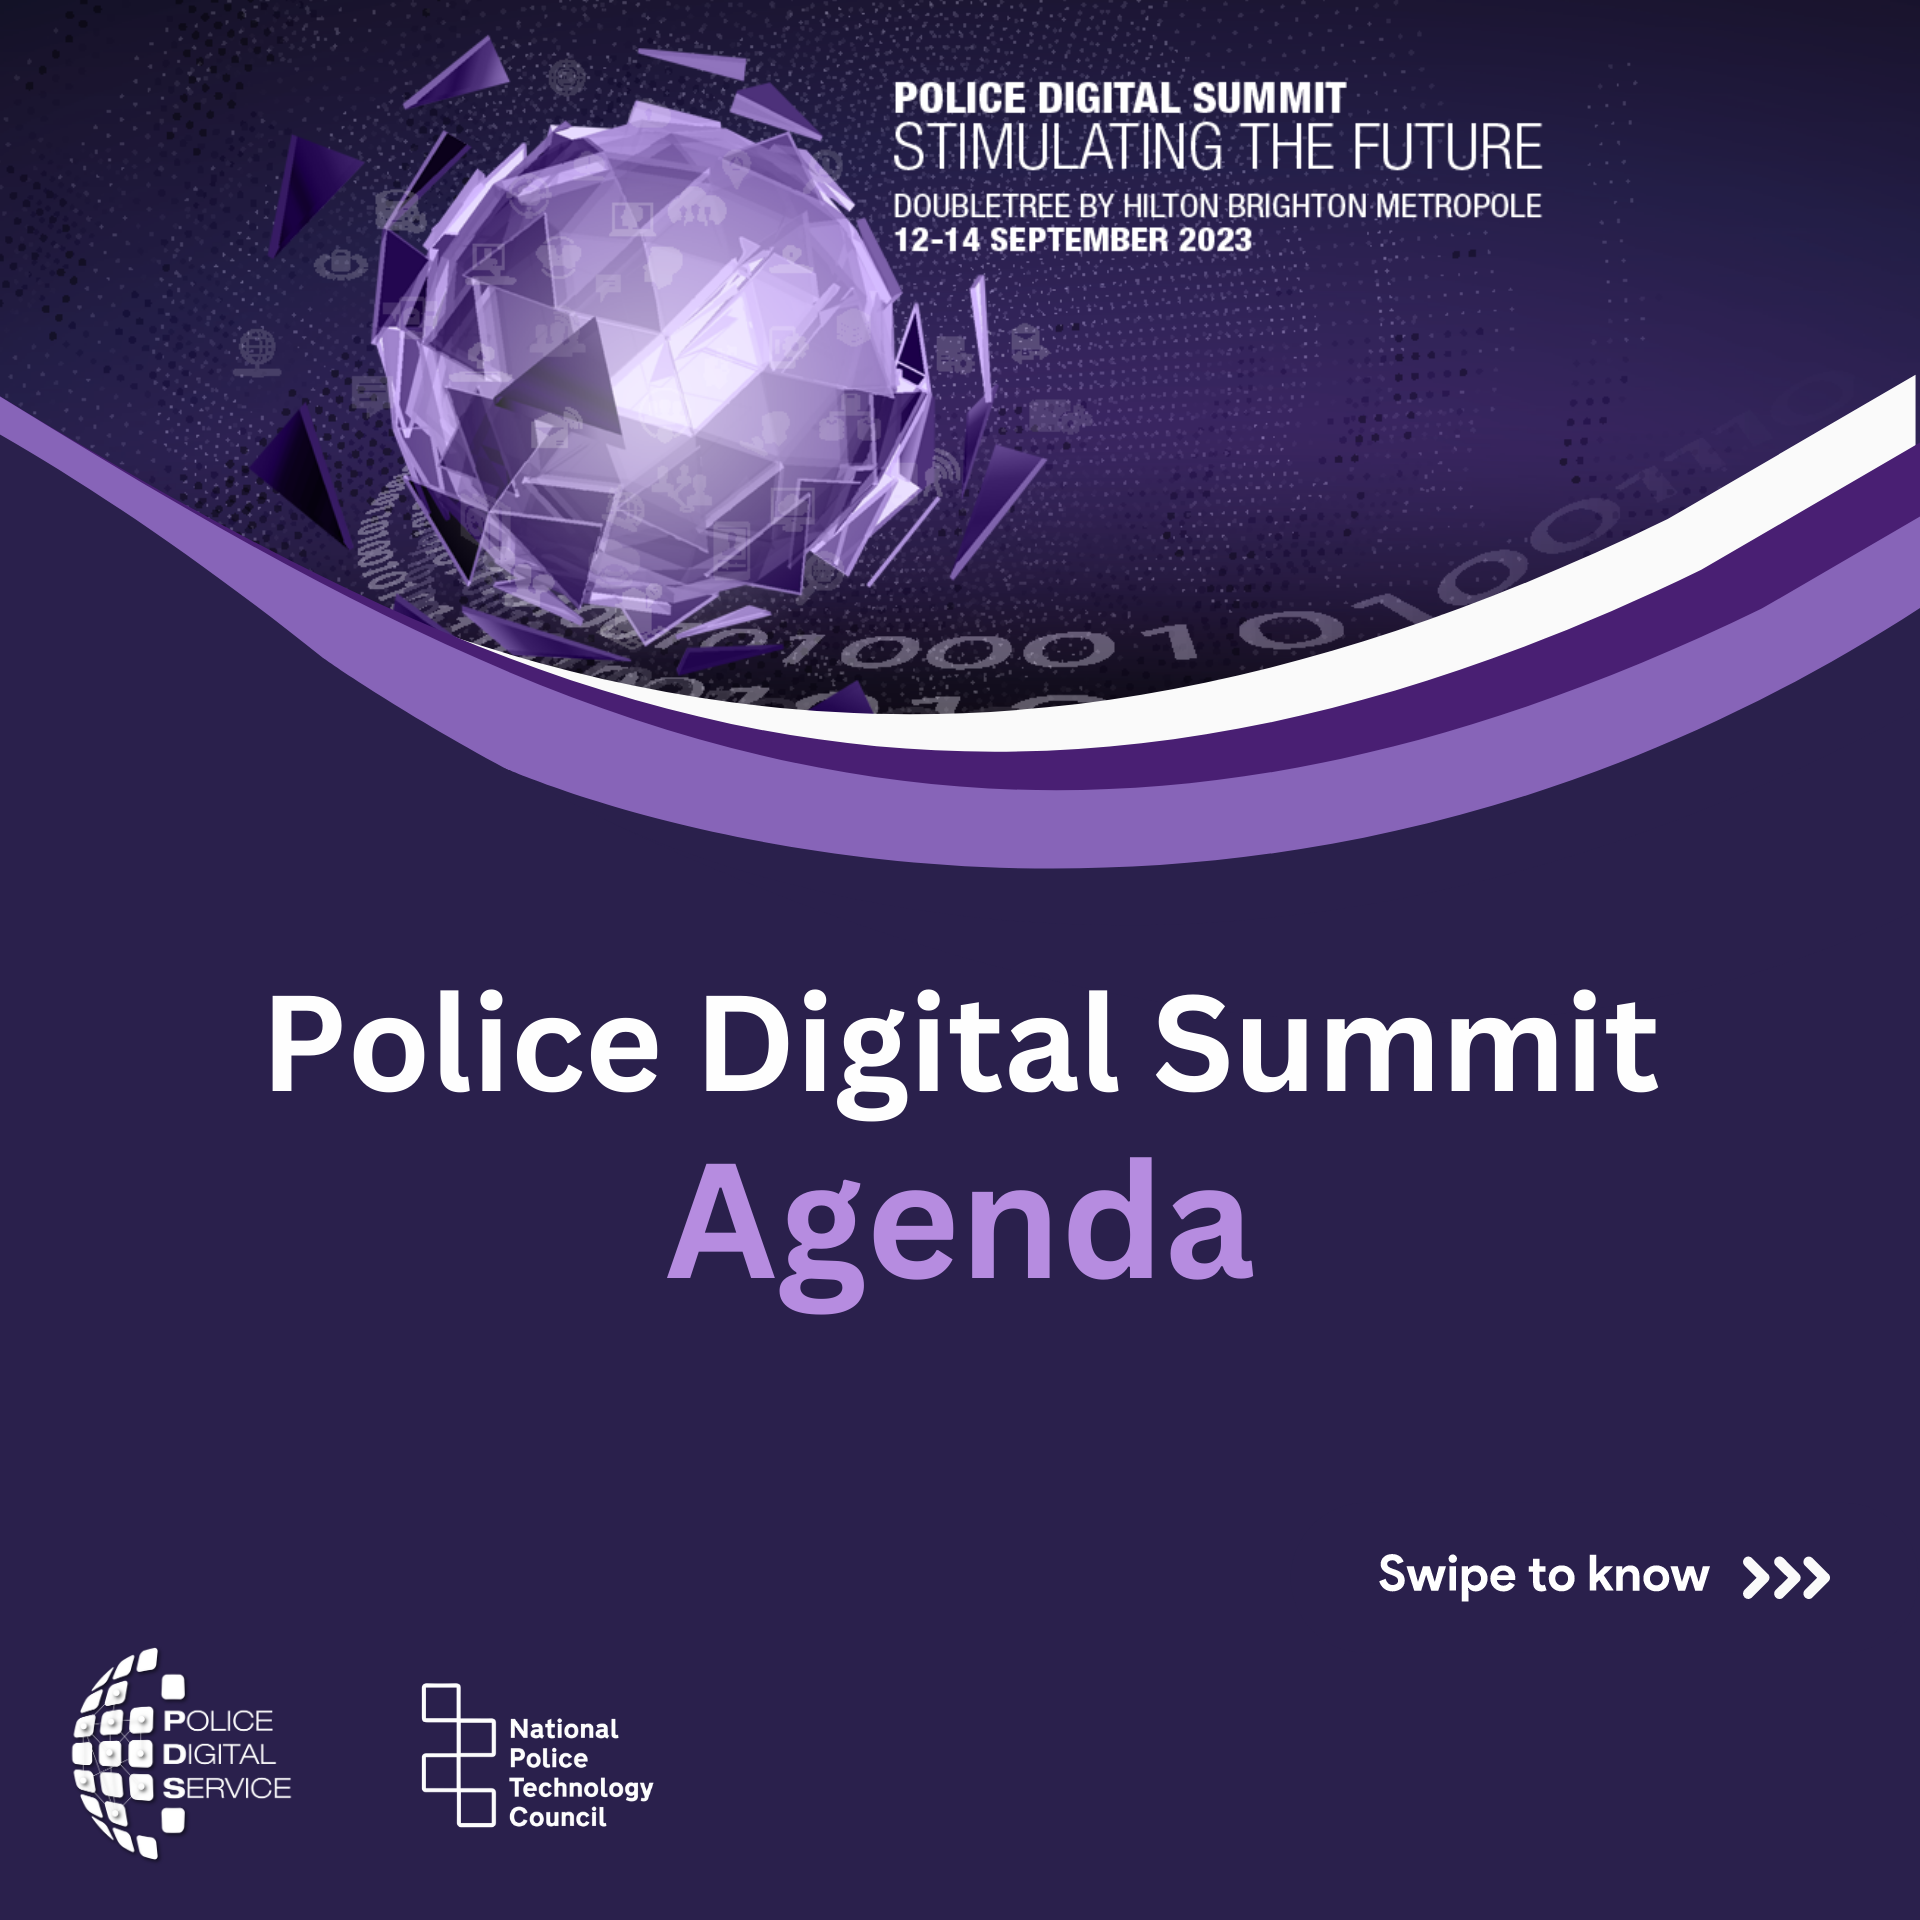 Police Digital Summit Agenda